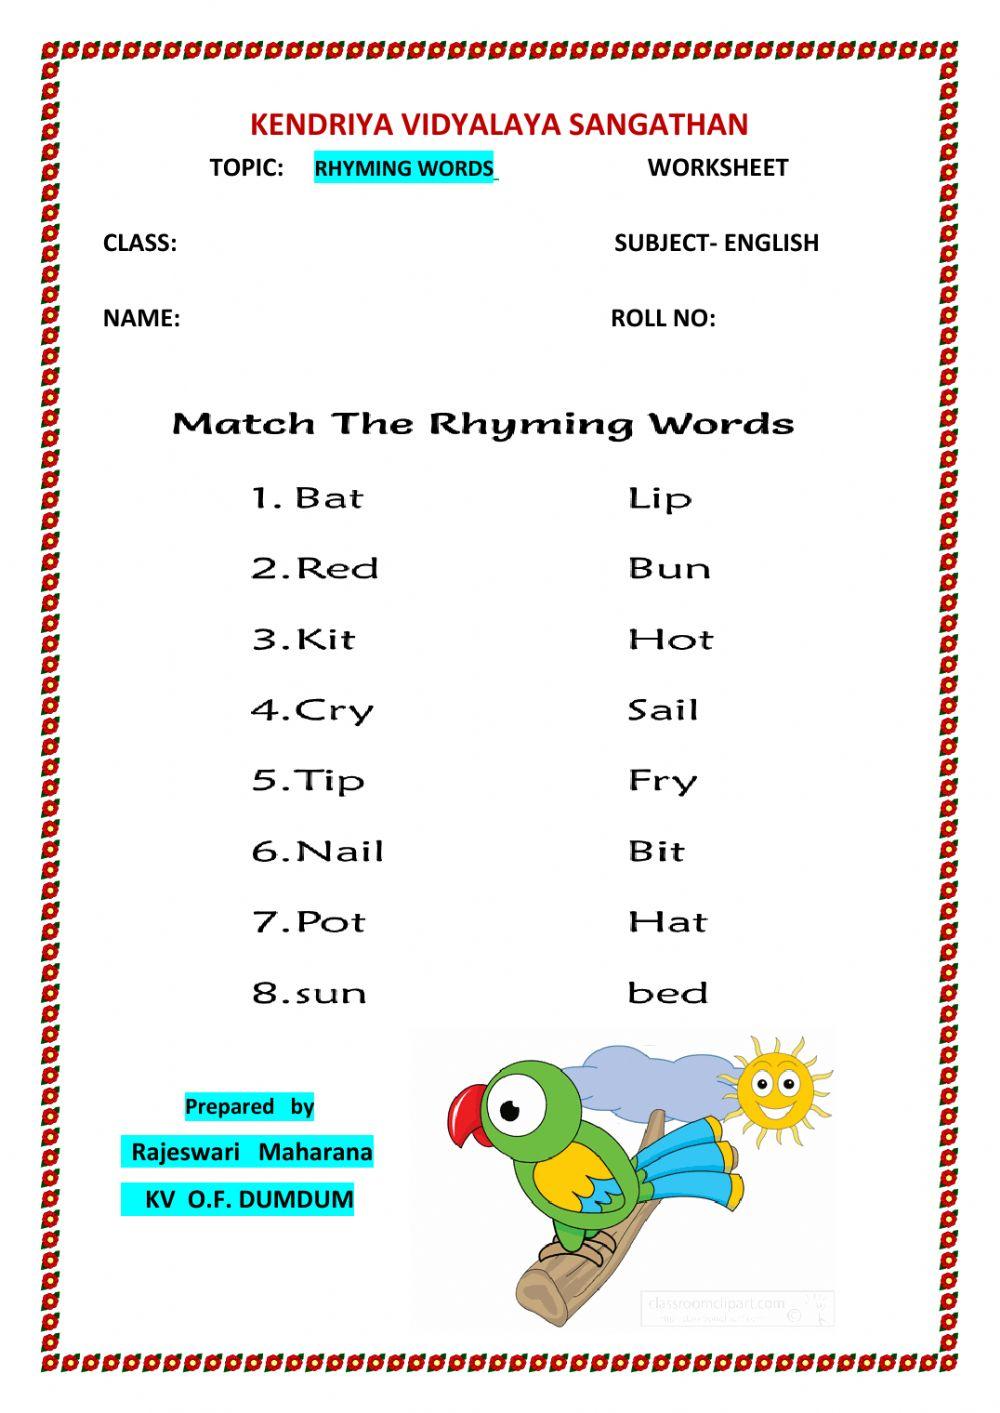 Lacing Rhyming Words Activity at Nursery - MRIS